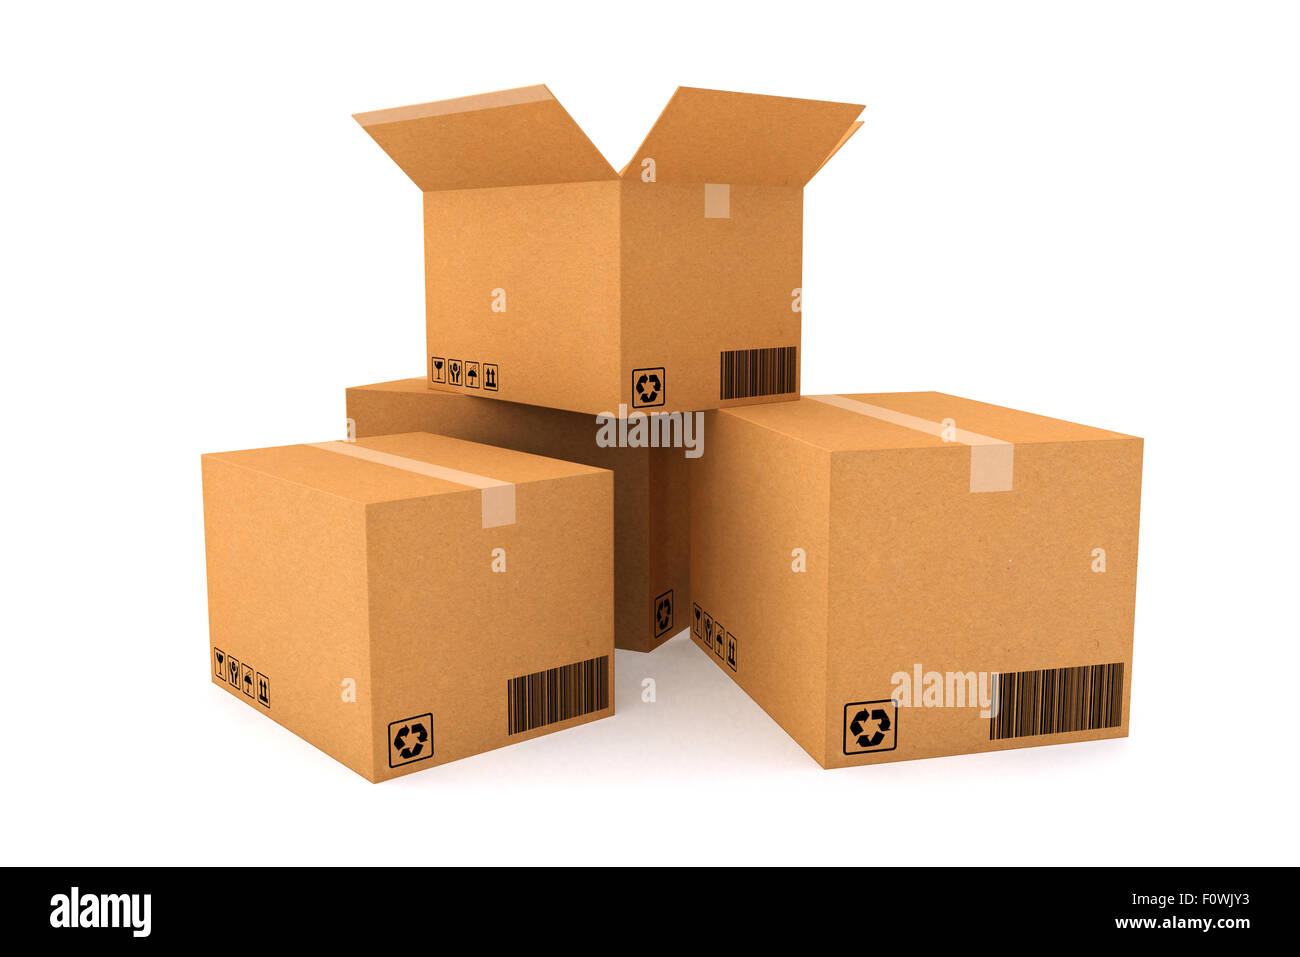 The same box. Стопка коробок. Wooden Cargo Box. 31408956 Cargo Box. Cargo Box background.